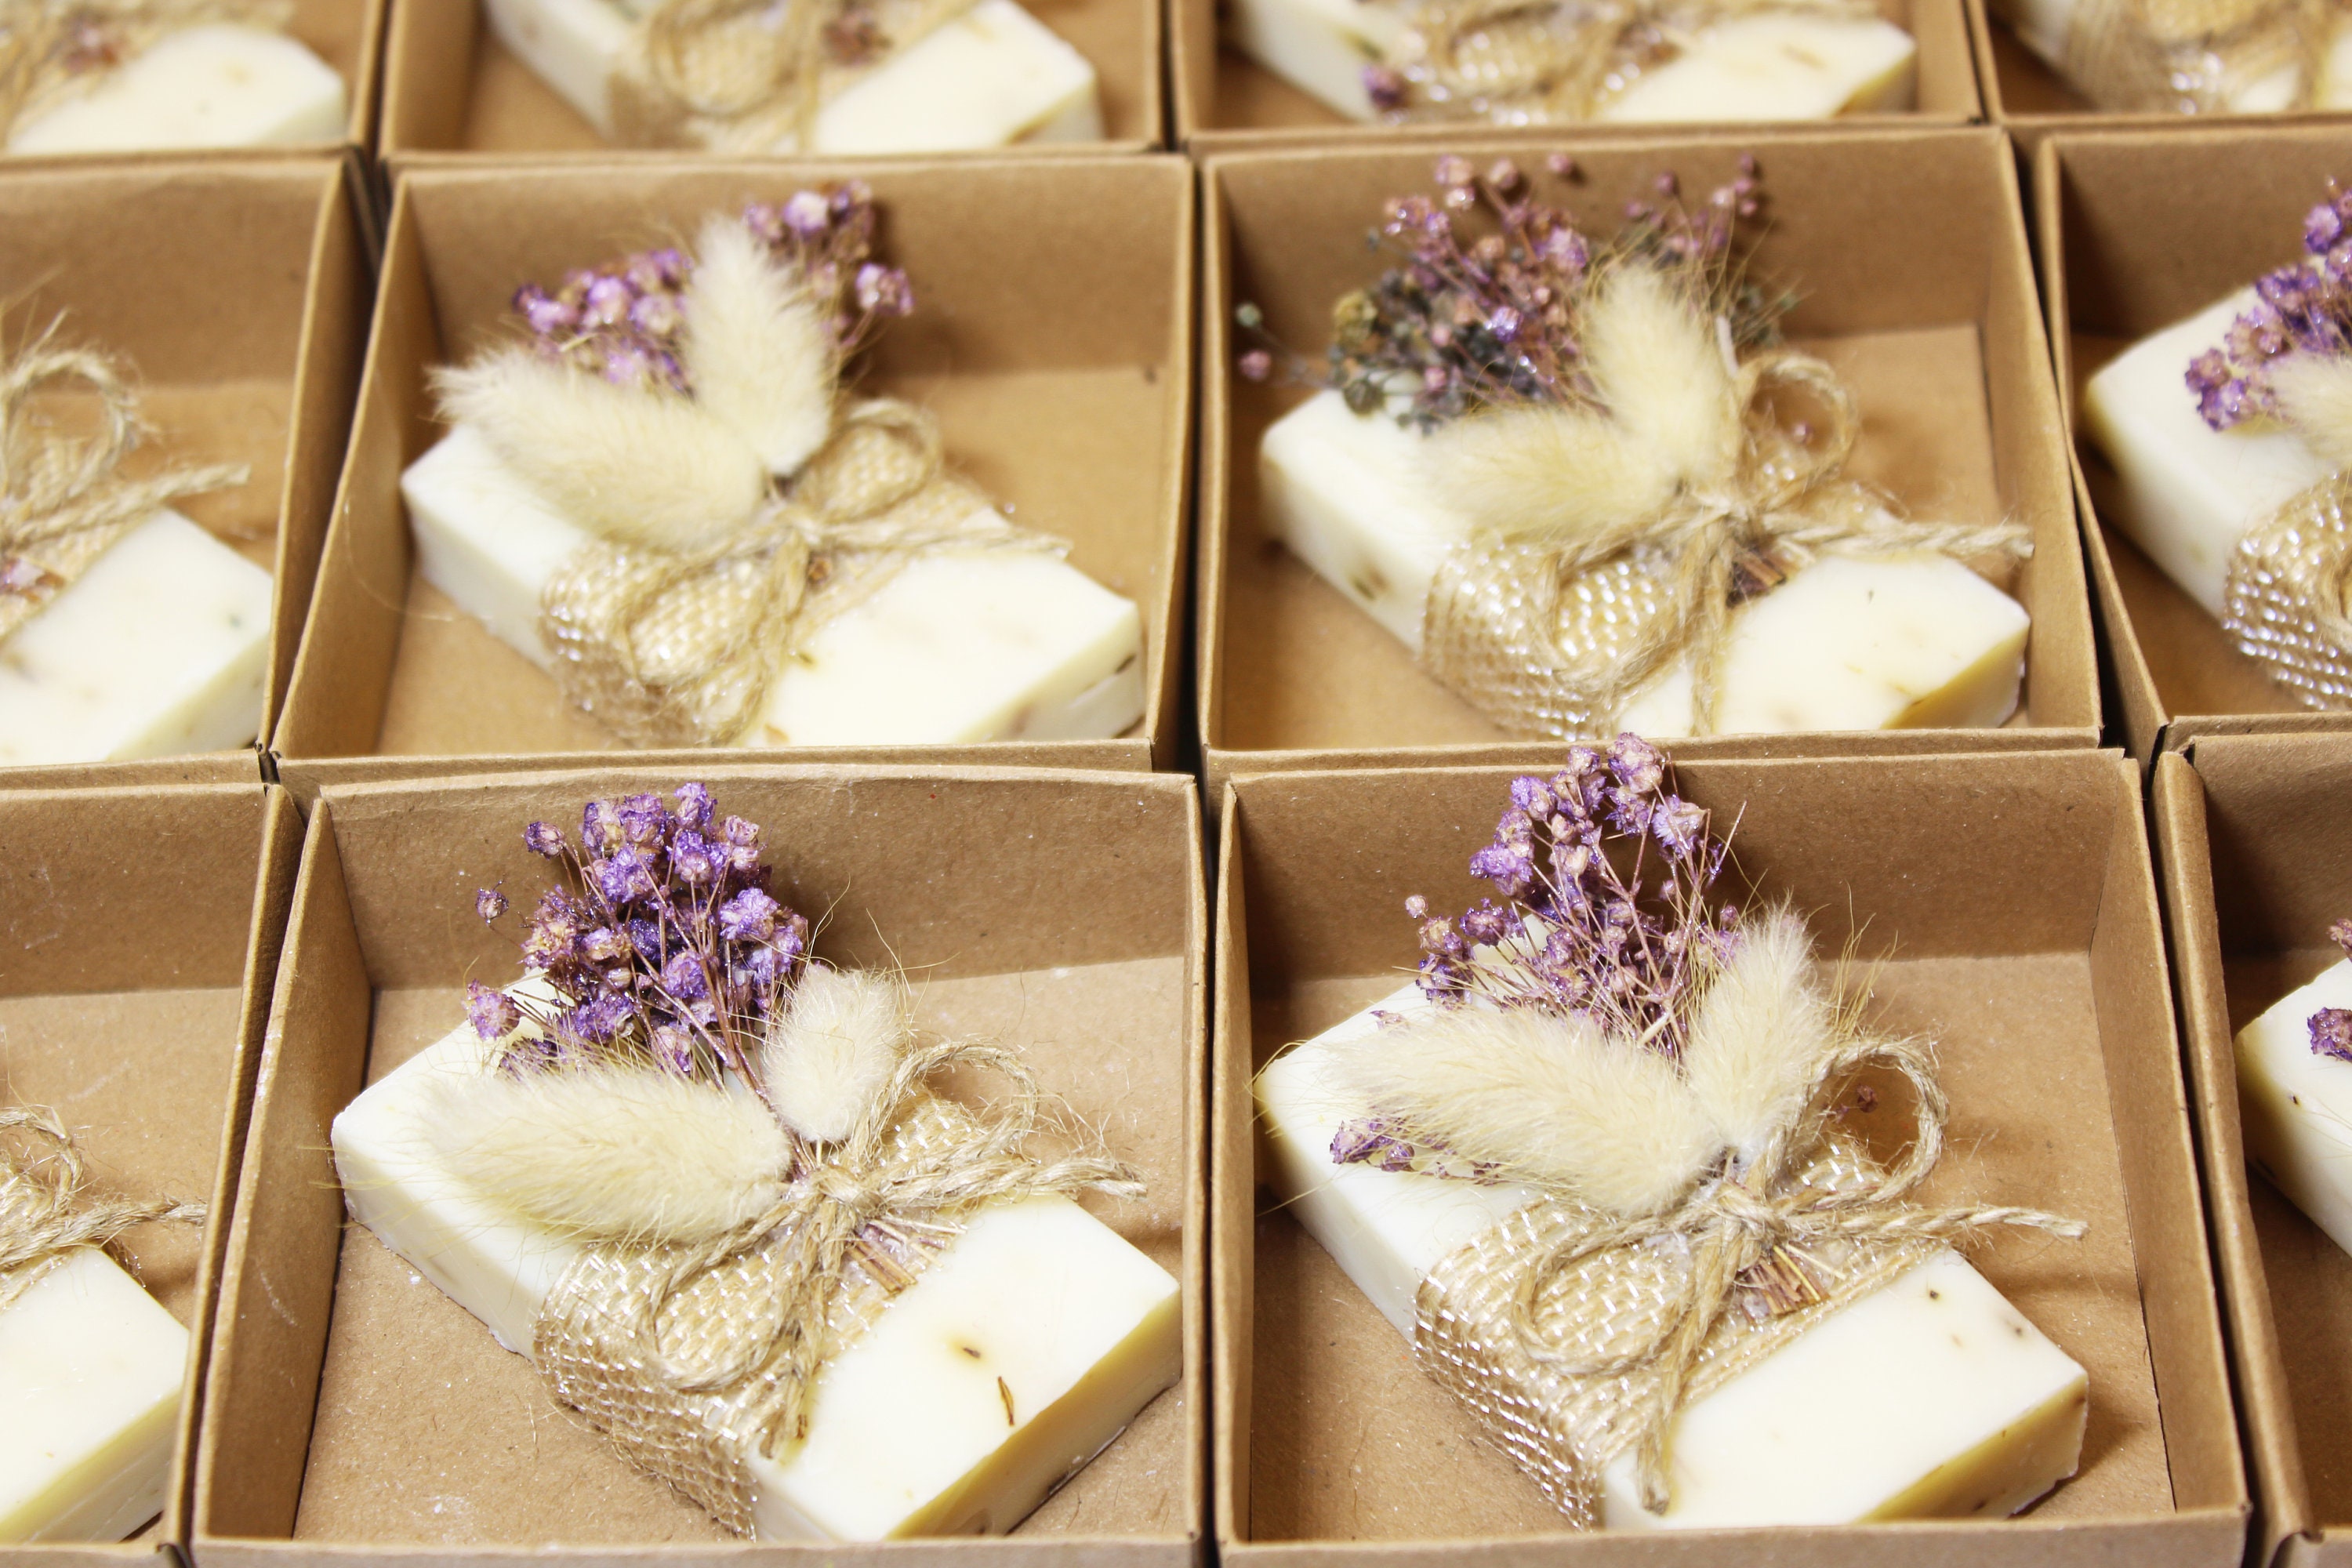 10 Snowflake Soaps: Bulk Favors, Gift Sets, Wedding Favors, Bridal Fav –  Plunk Soap Company